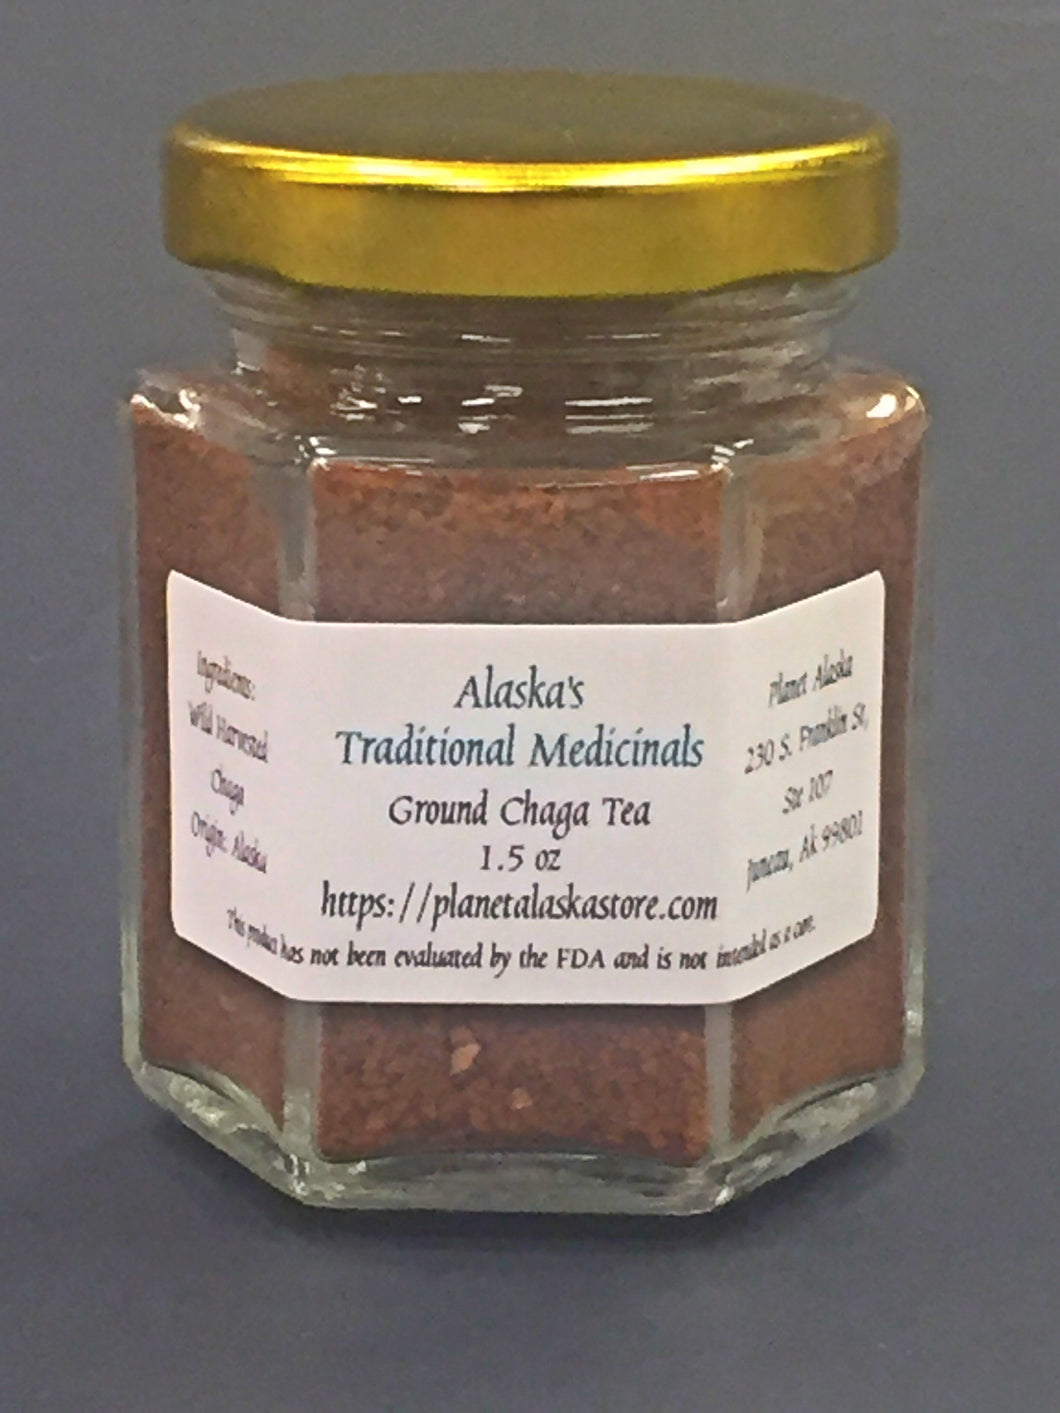 Ground Chaga Tea